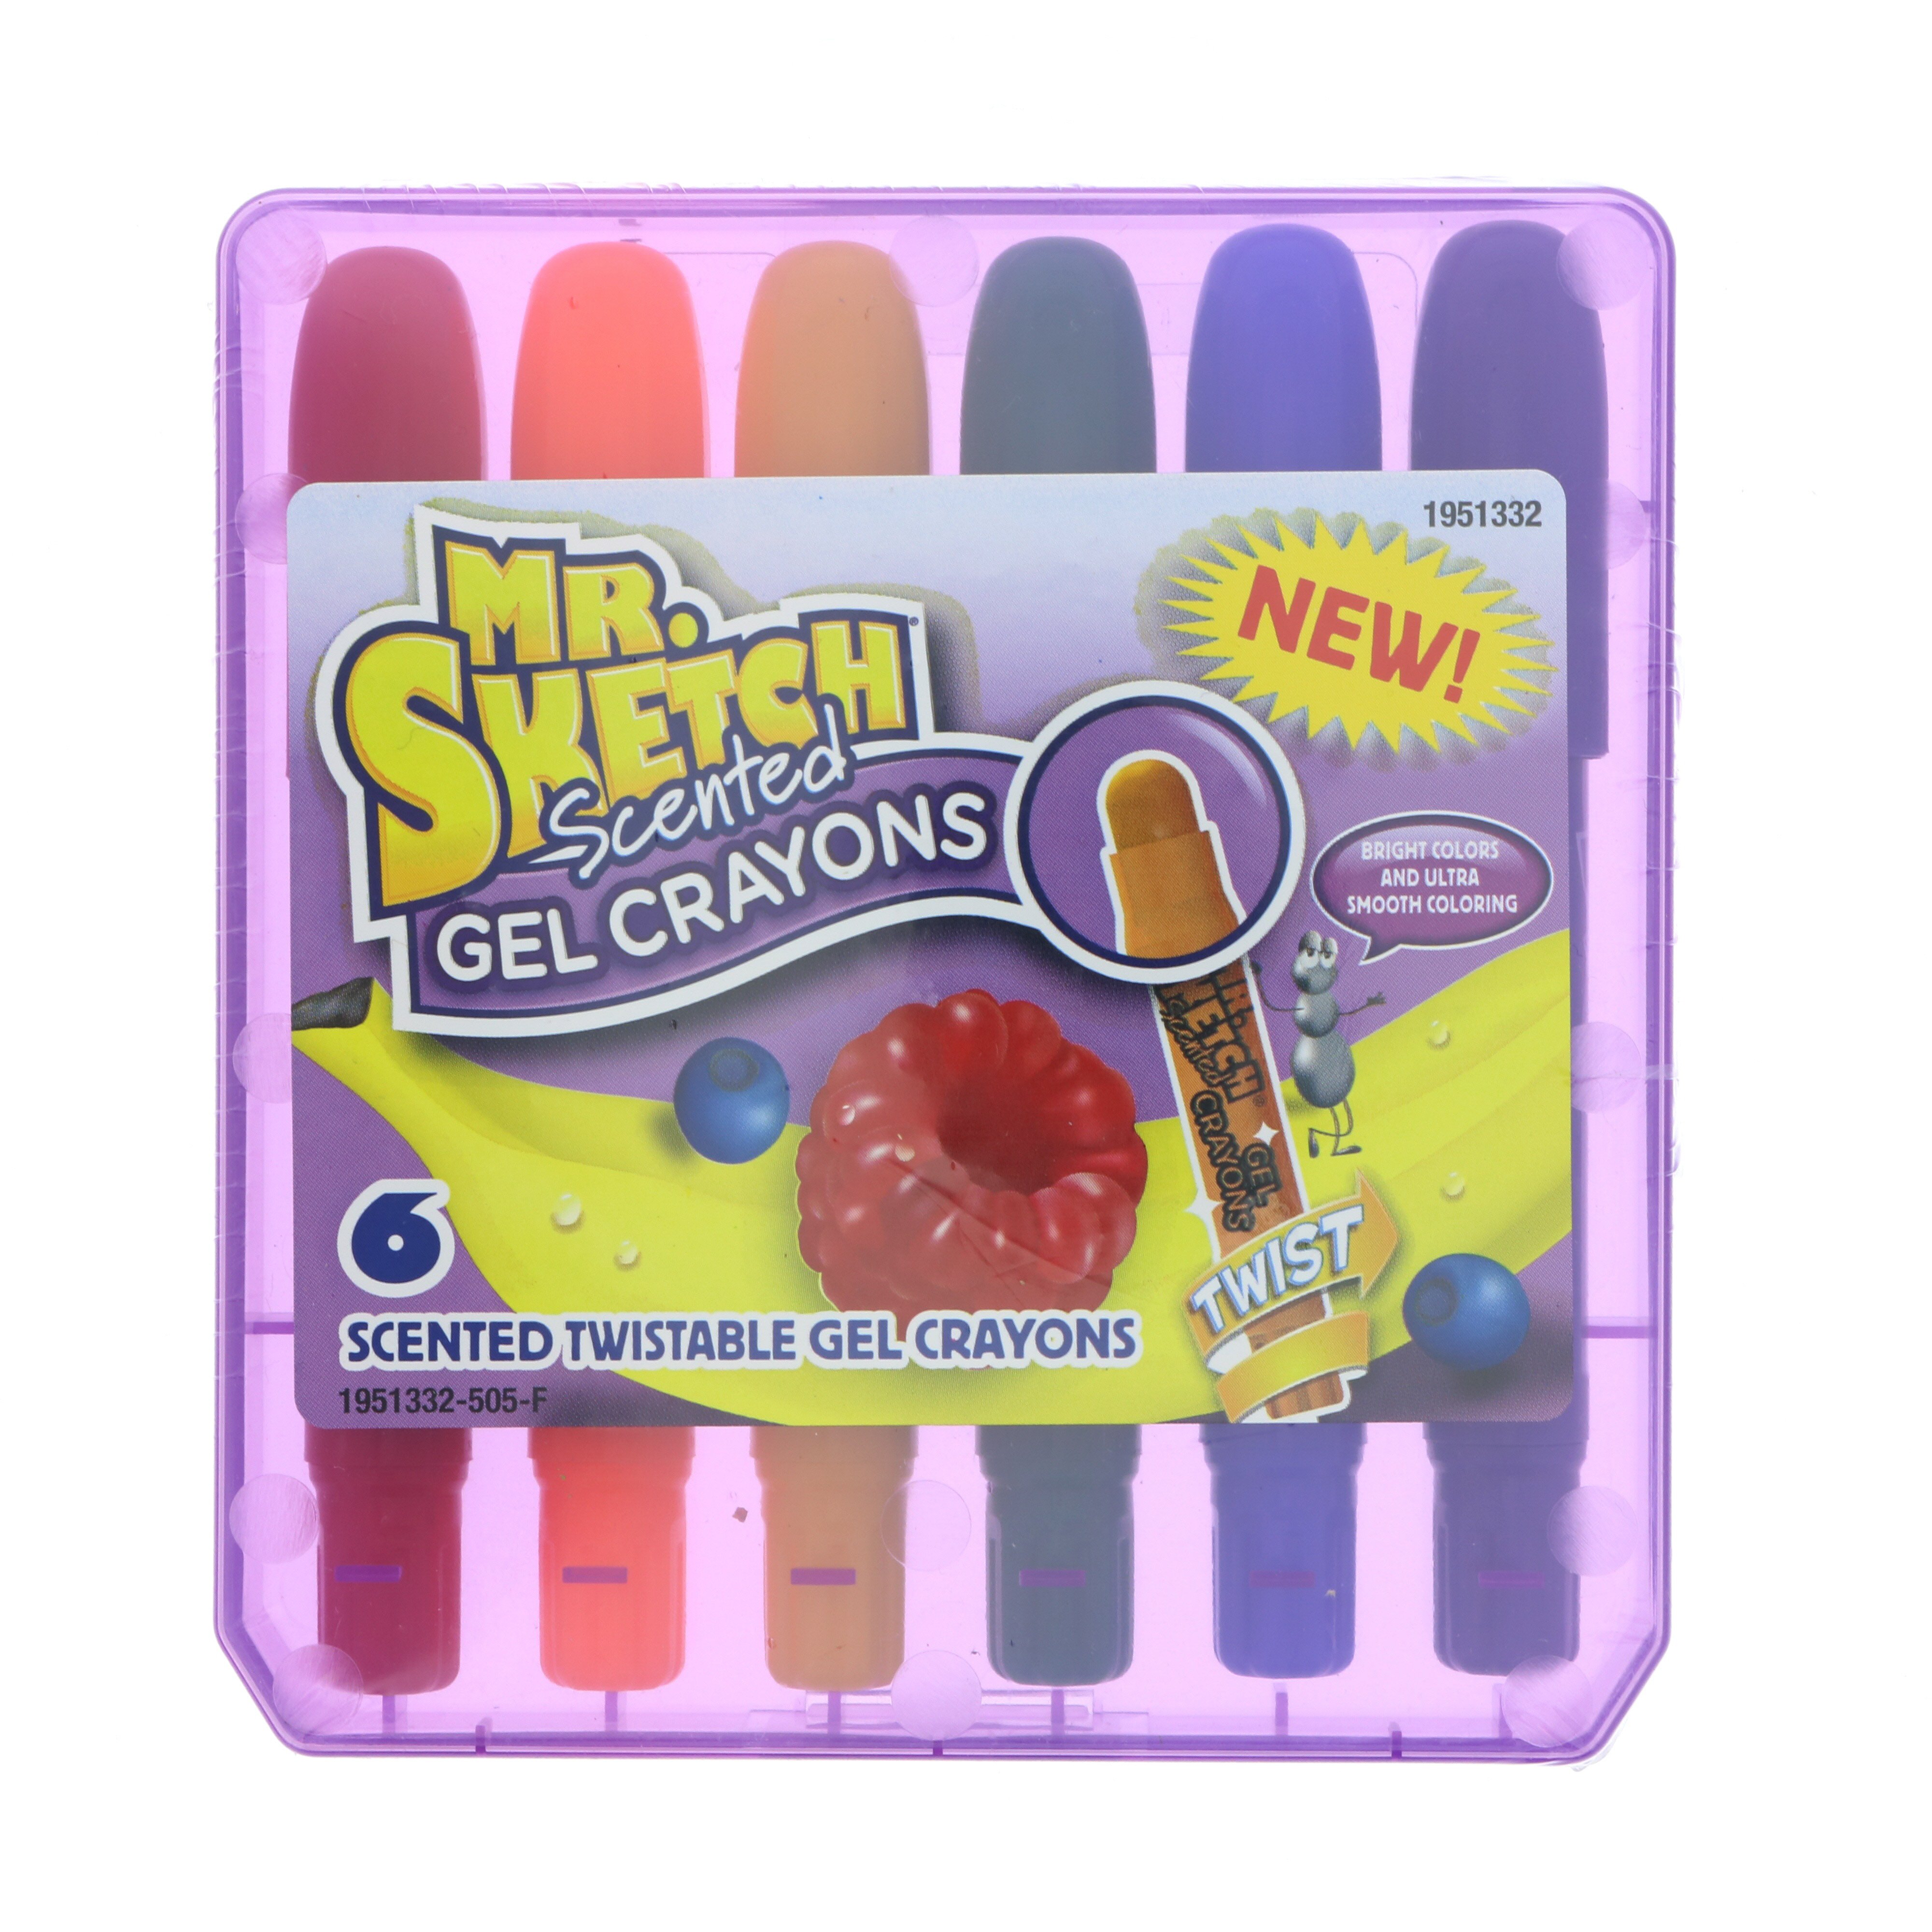 Mr. Sketch Scented Twistable Gel Crayons, 6 count